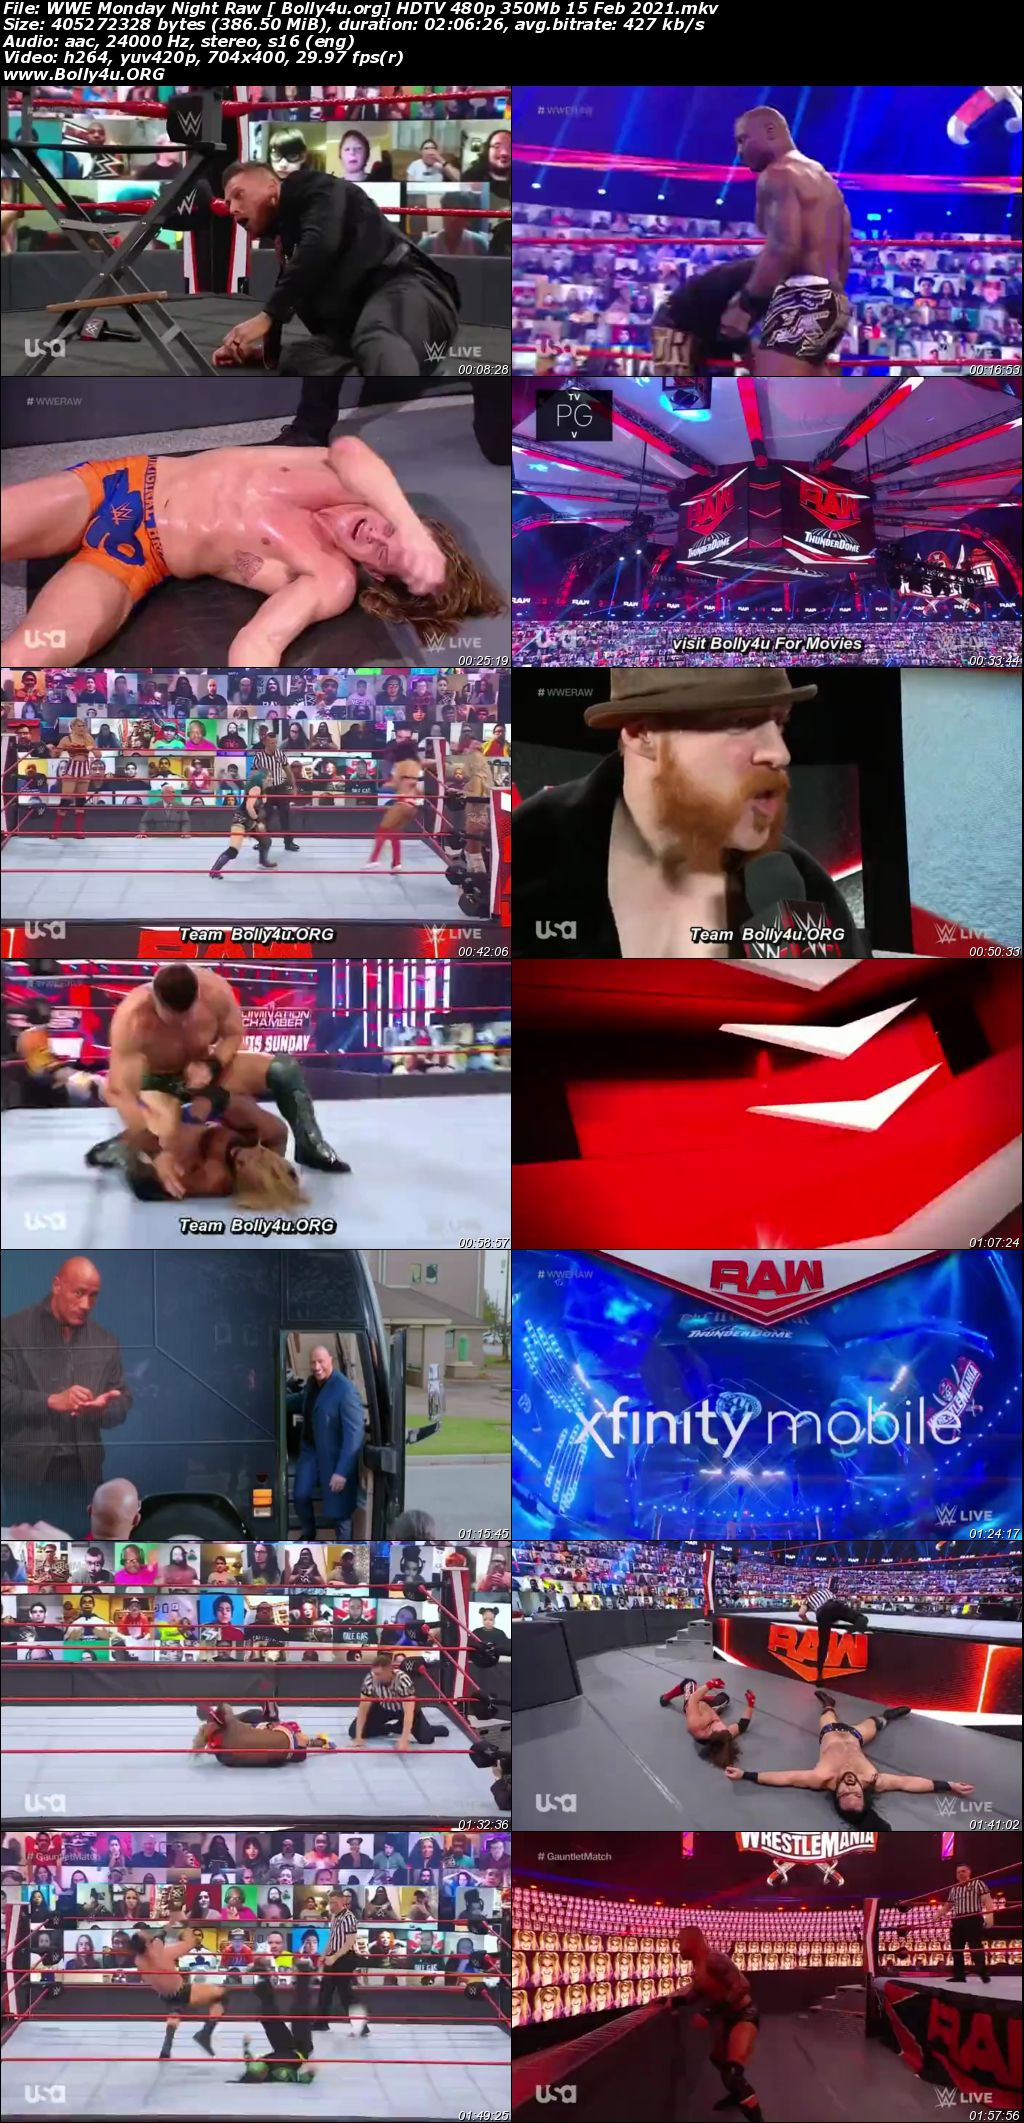 WWE Monday Night Raw HDTV 480p 350Mb 15 Feb 2021 Download